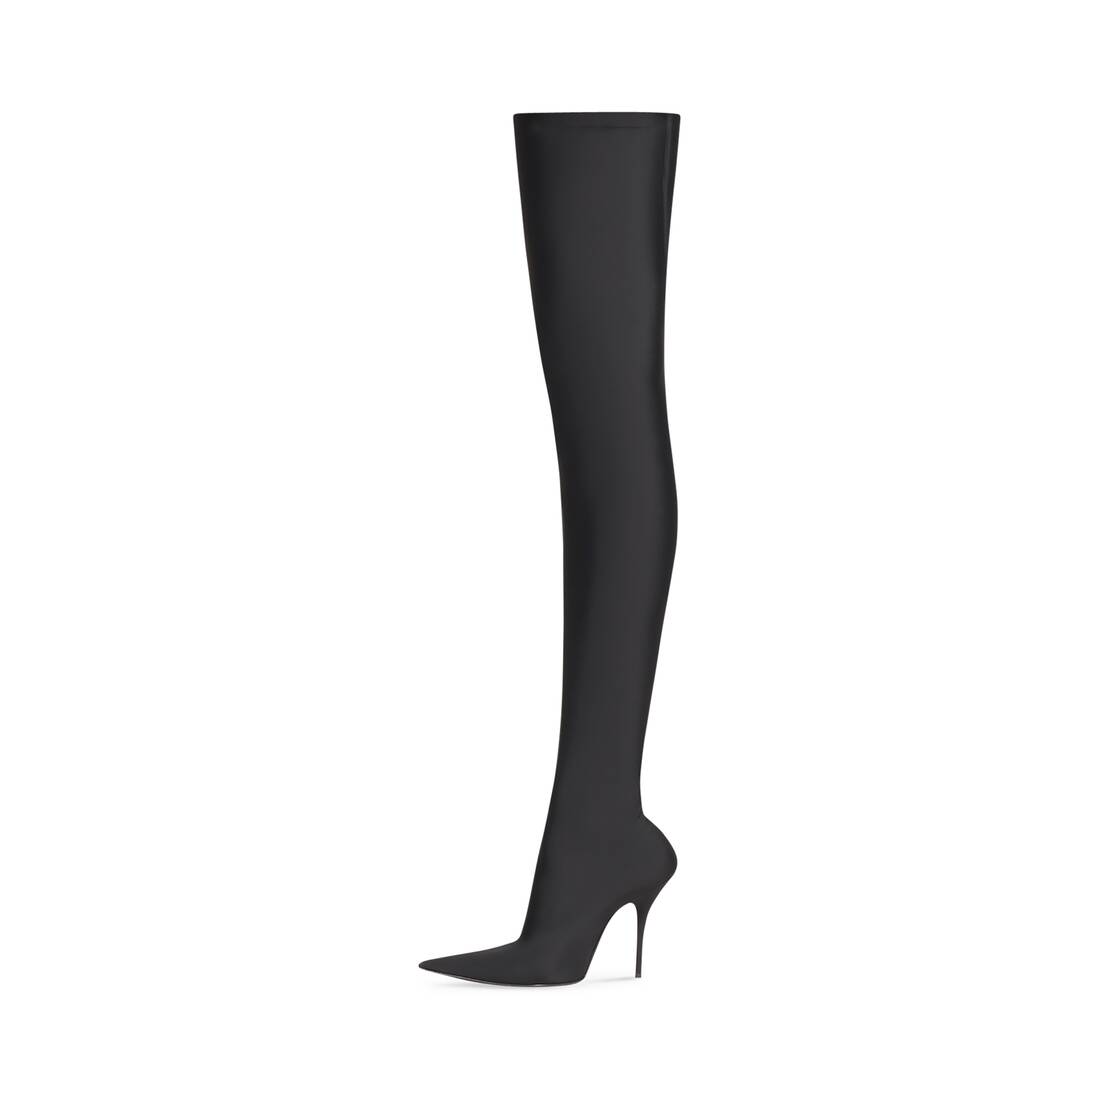 Balenciaga  Women039s leather knee boots size 39 9US  eBay